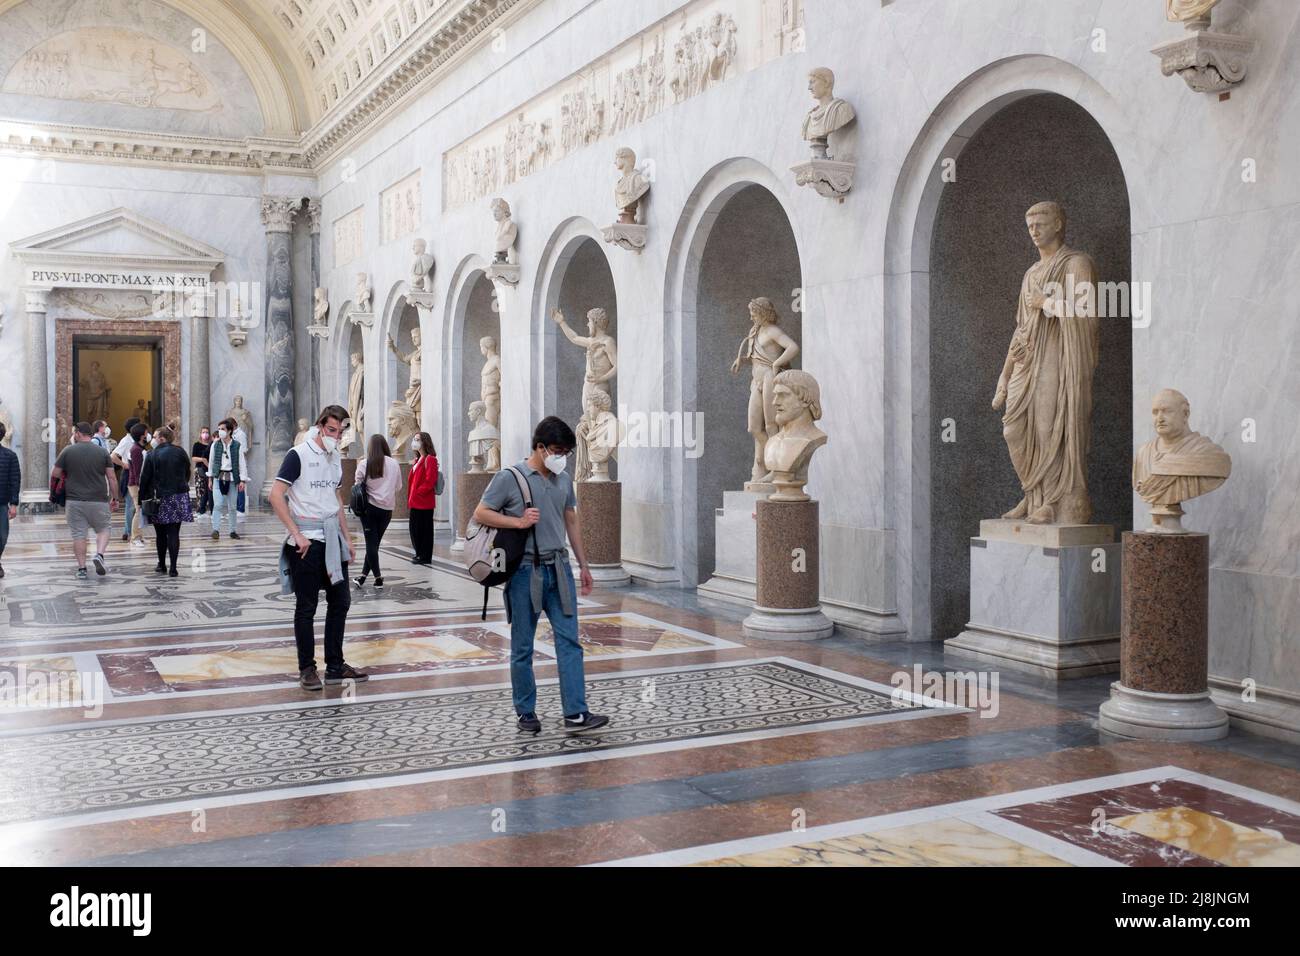 Sculpture Gallery Musei Vaticani Rome Italy Stock Photo